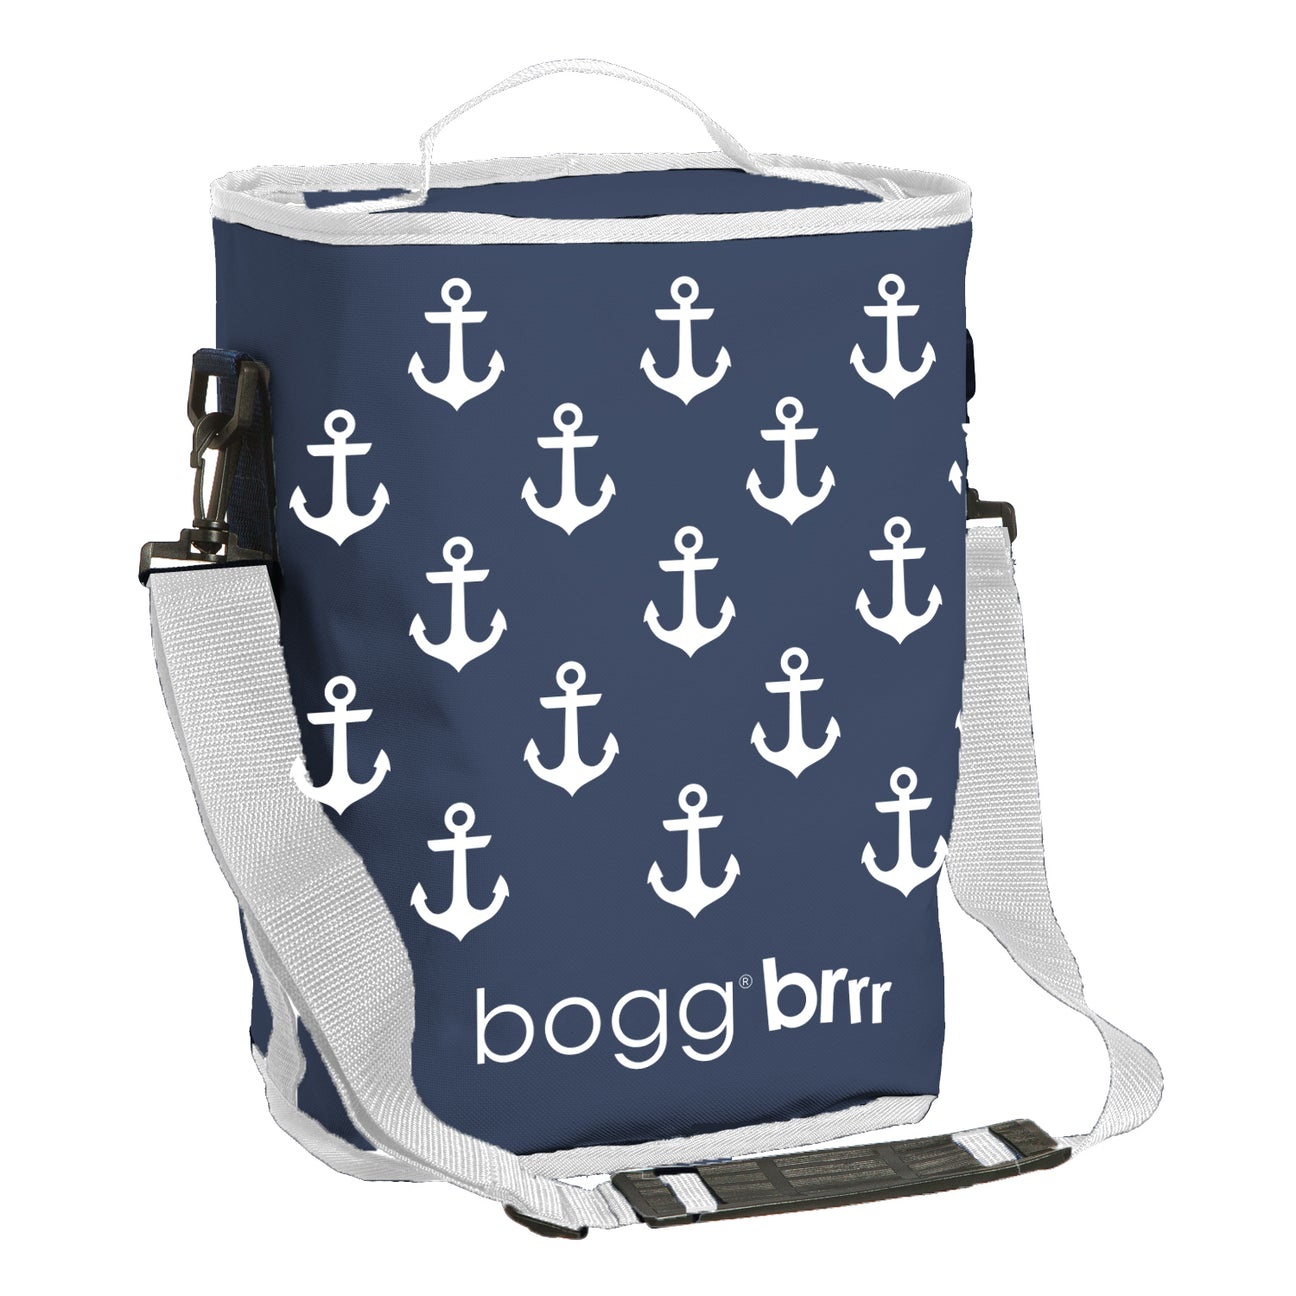 Bogg Bag Original Bogg Bag in Under The Sea(foam) - Her Hide Out